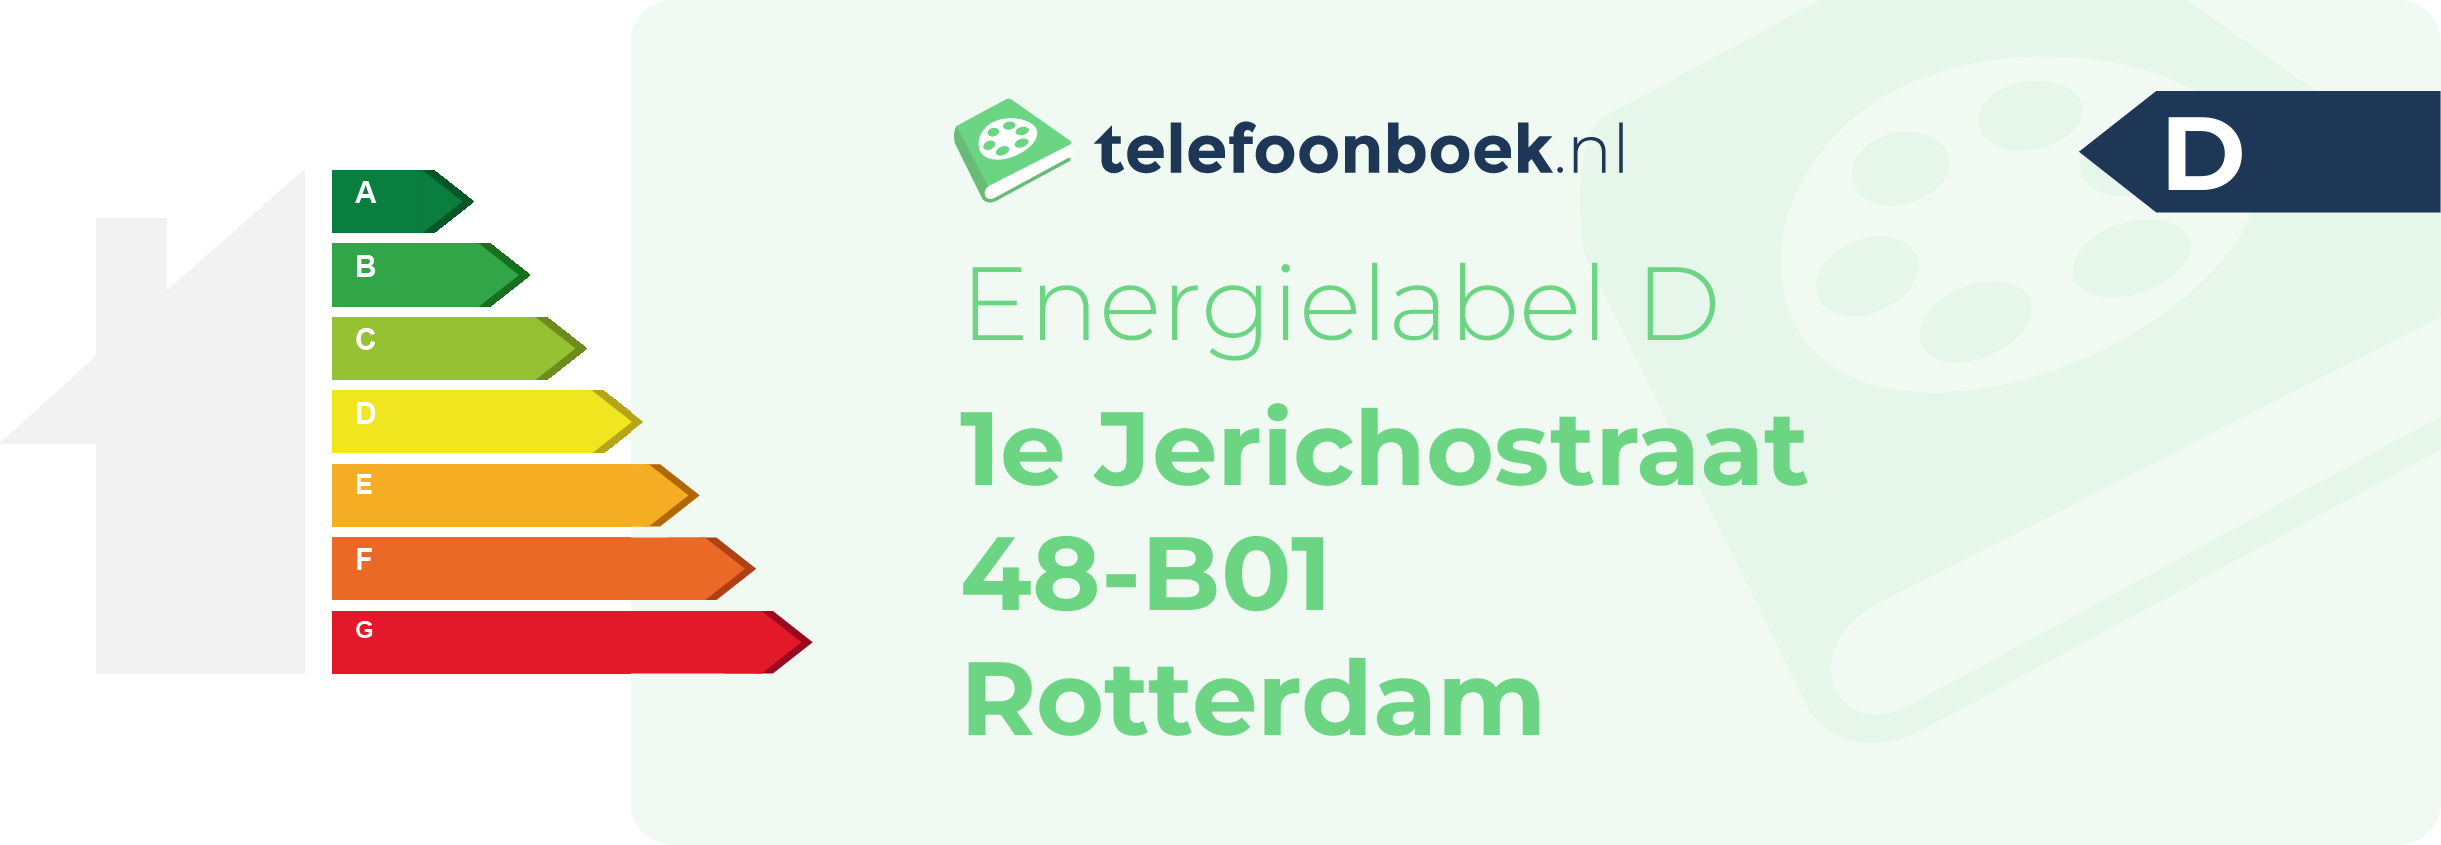 Energielabel 1e Jerichostraat 48-B01 Rotterdam